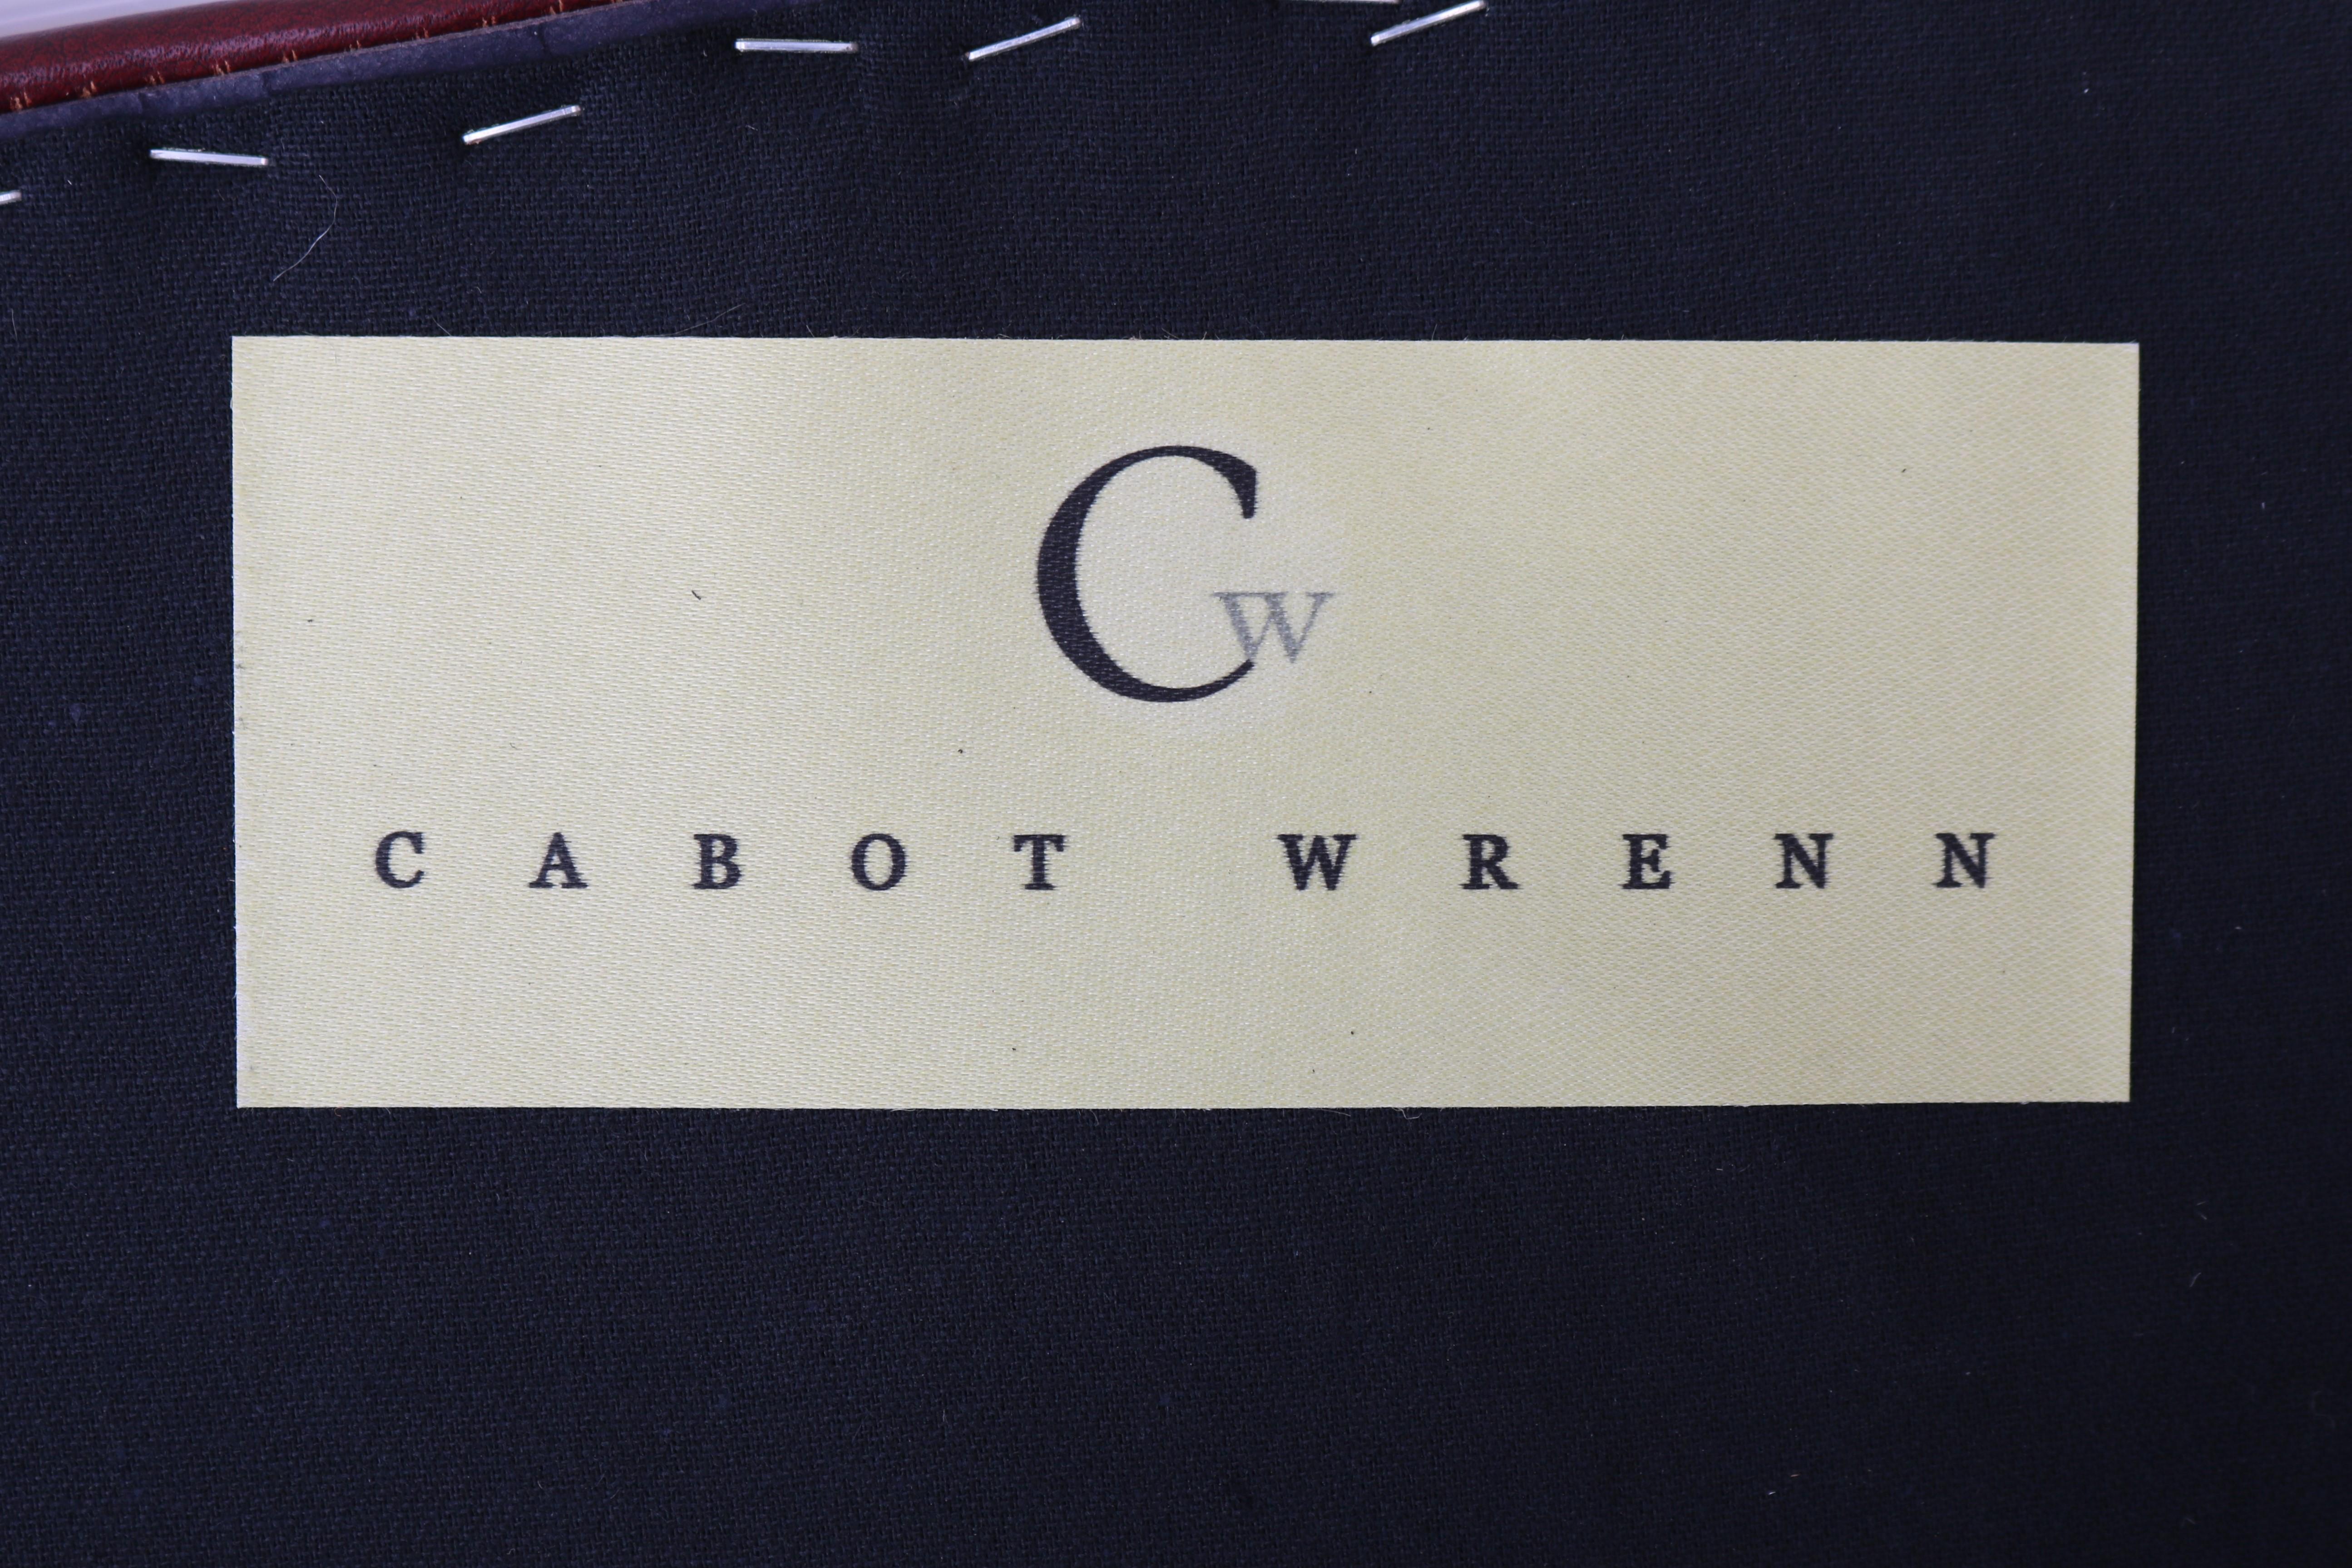 Classic Cabot Wrenn Graham Tufted Burgundy Leather Executive Swivel Desk Chair For Sale 8